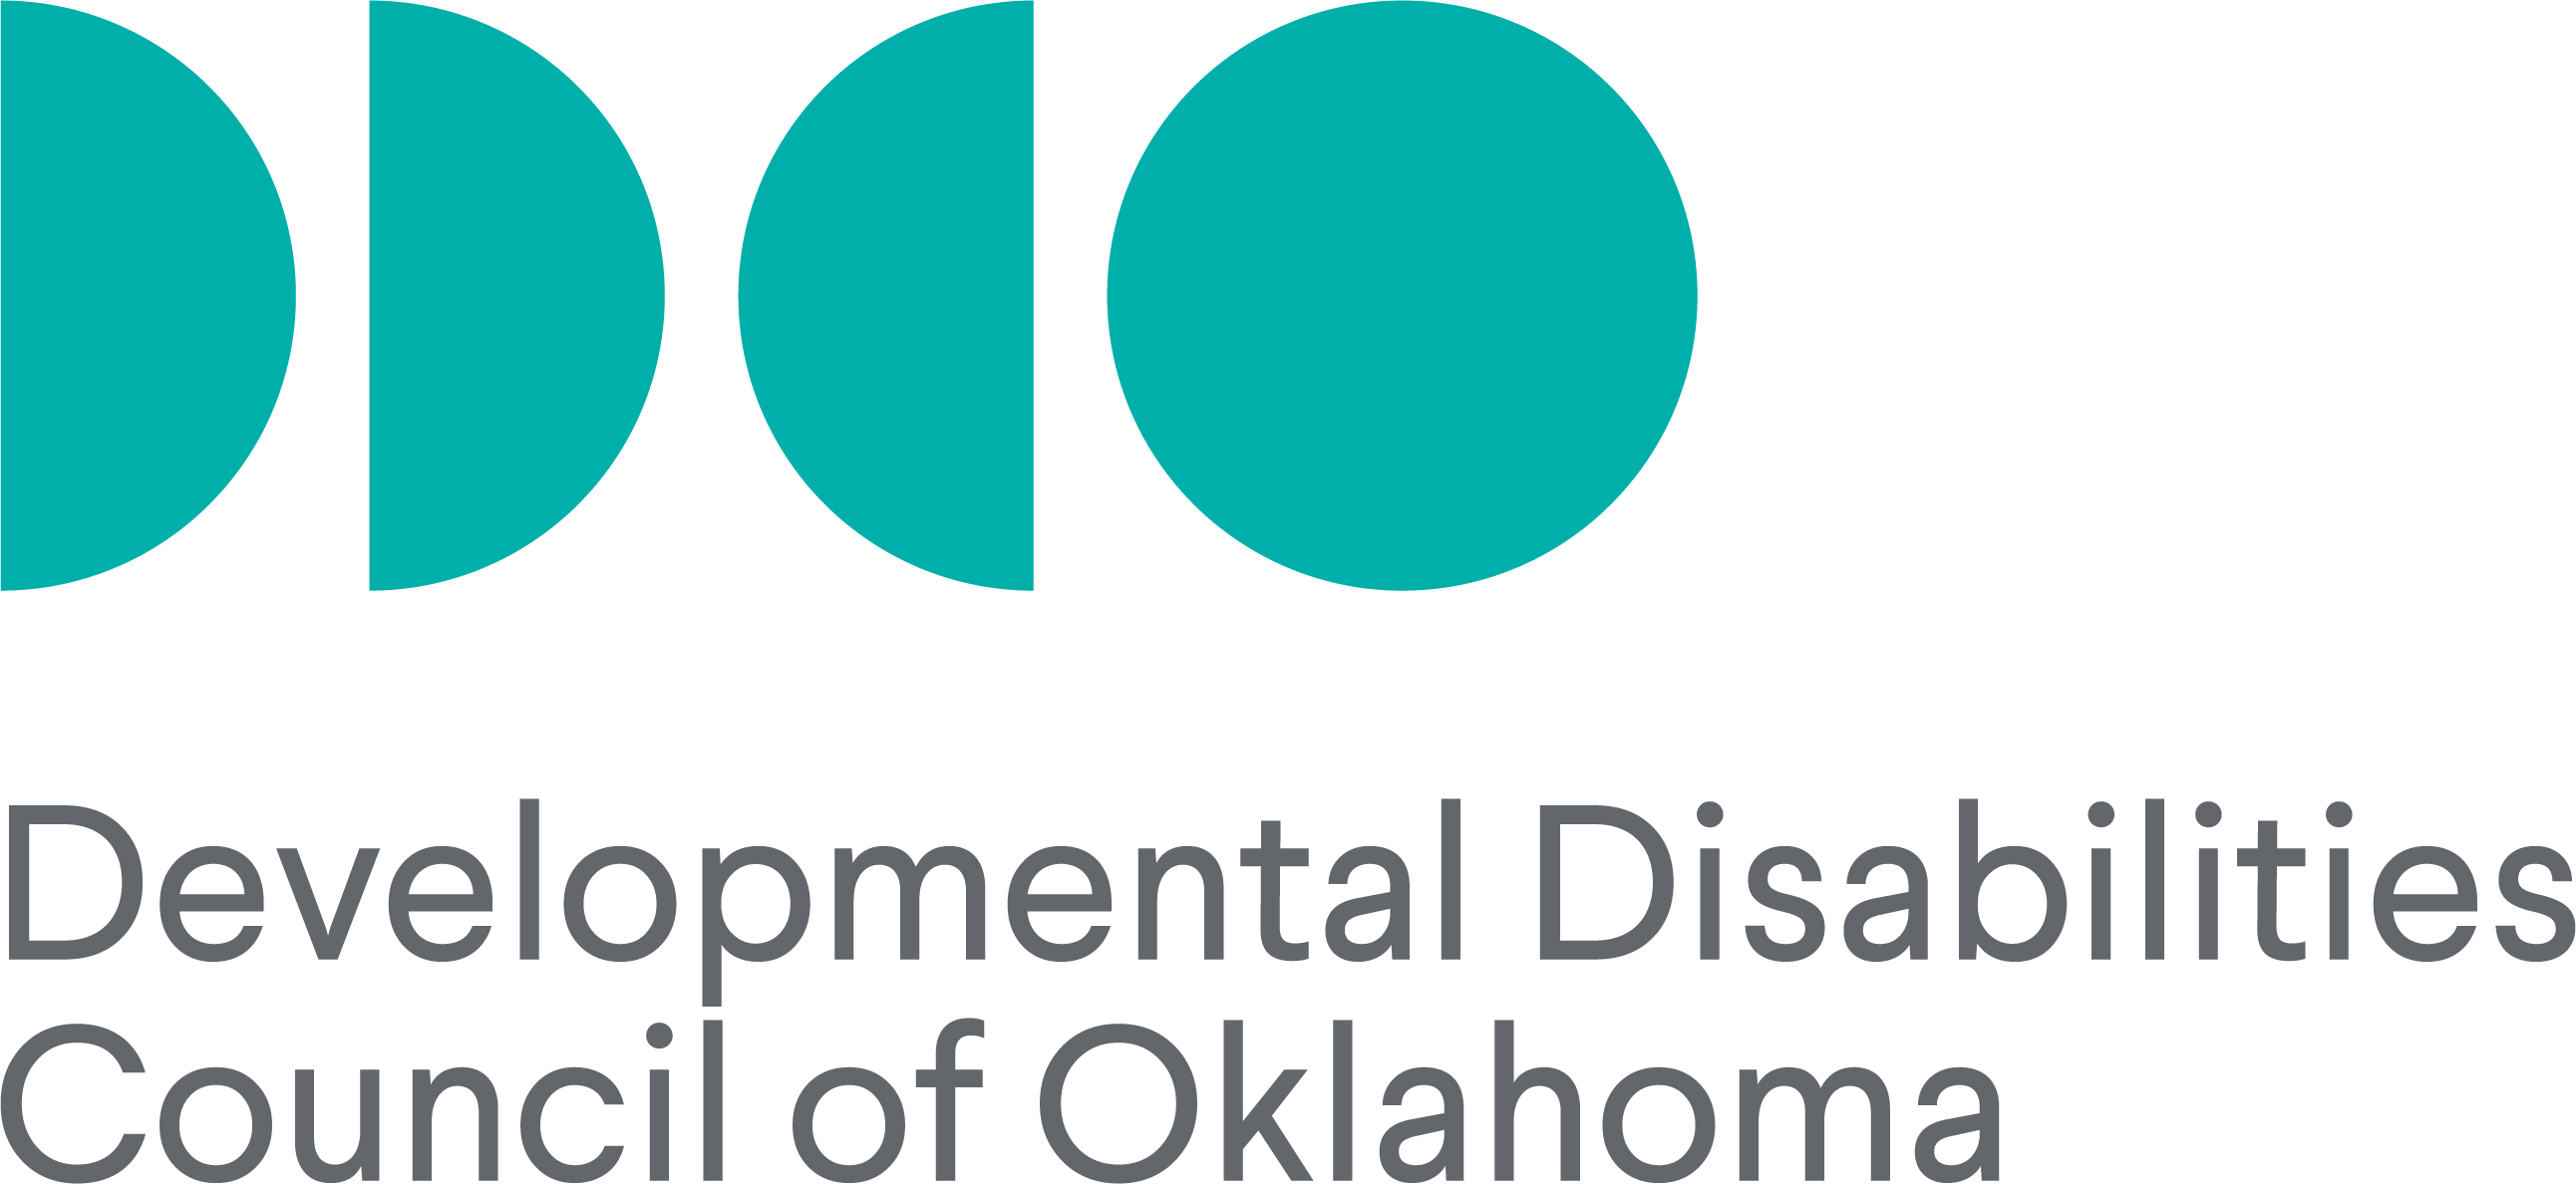 Developmental Disabilities Council of Oklahoma